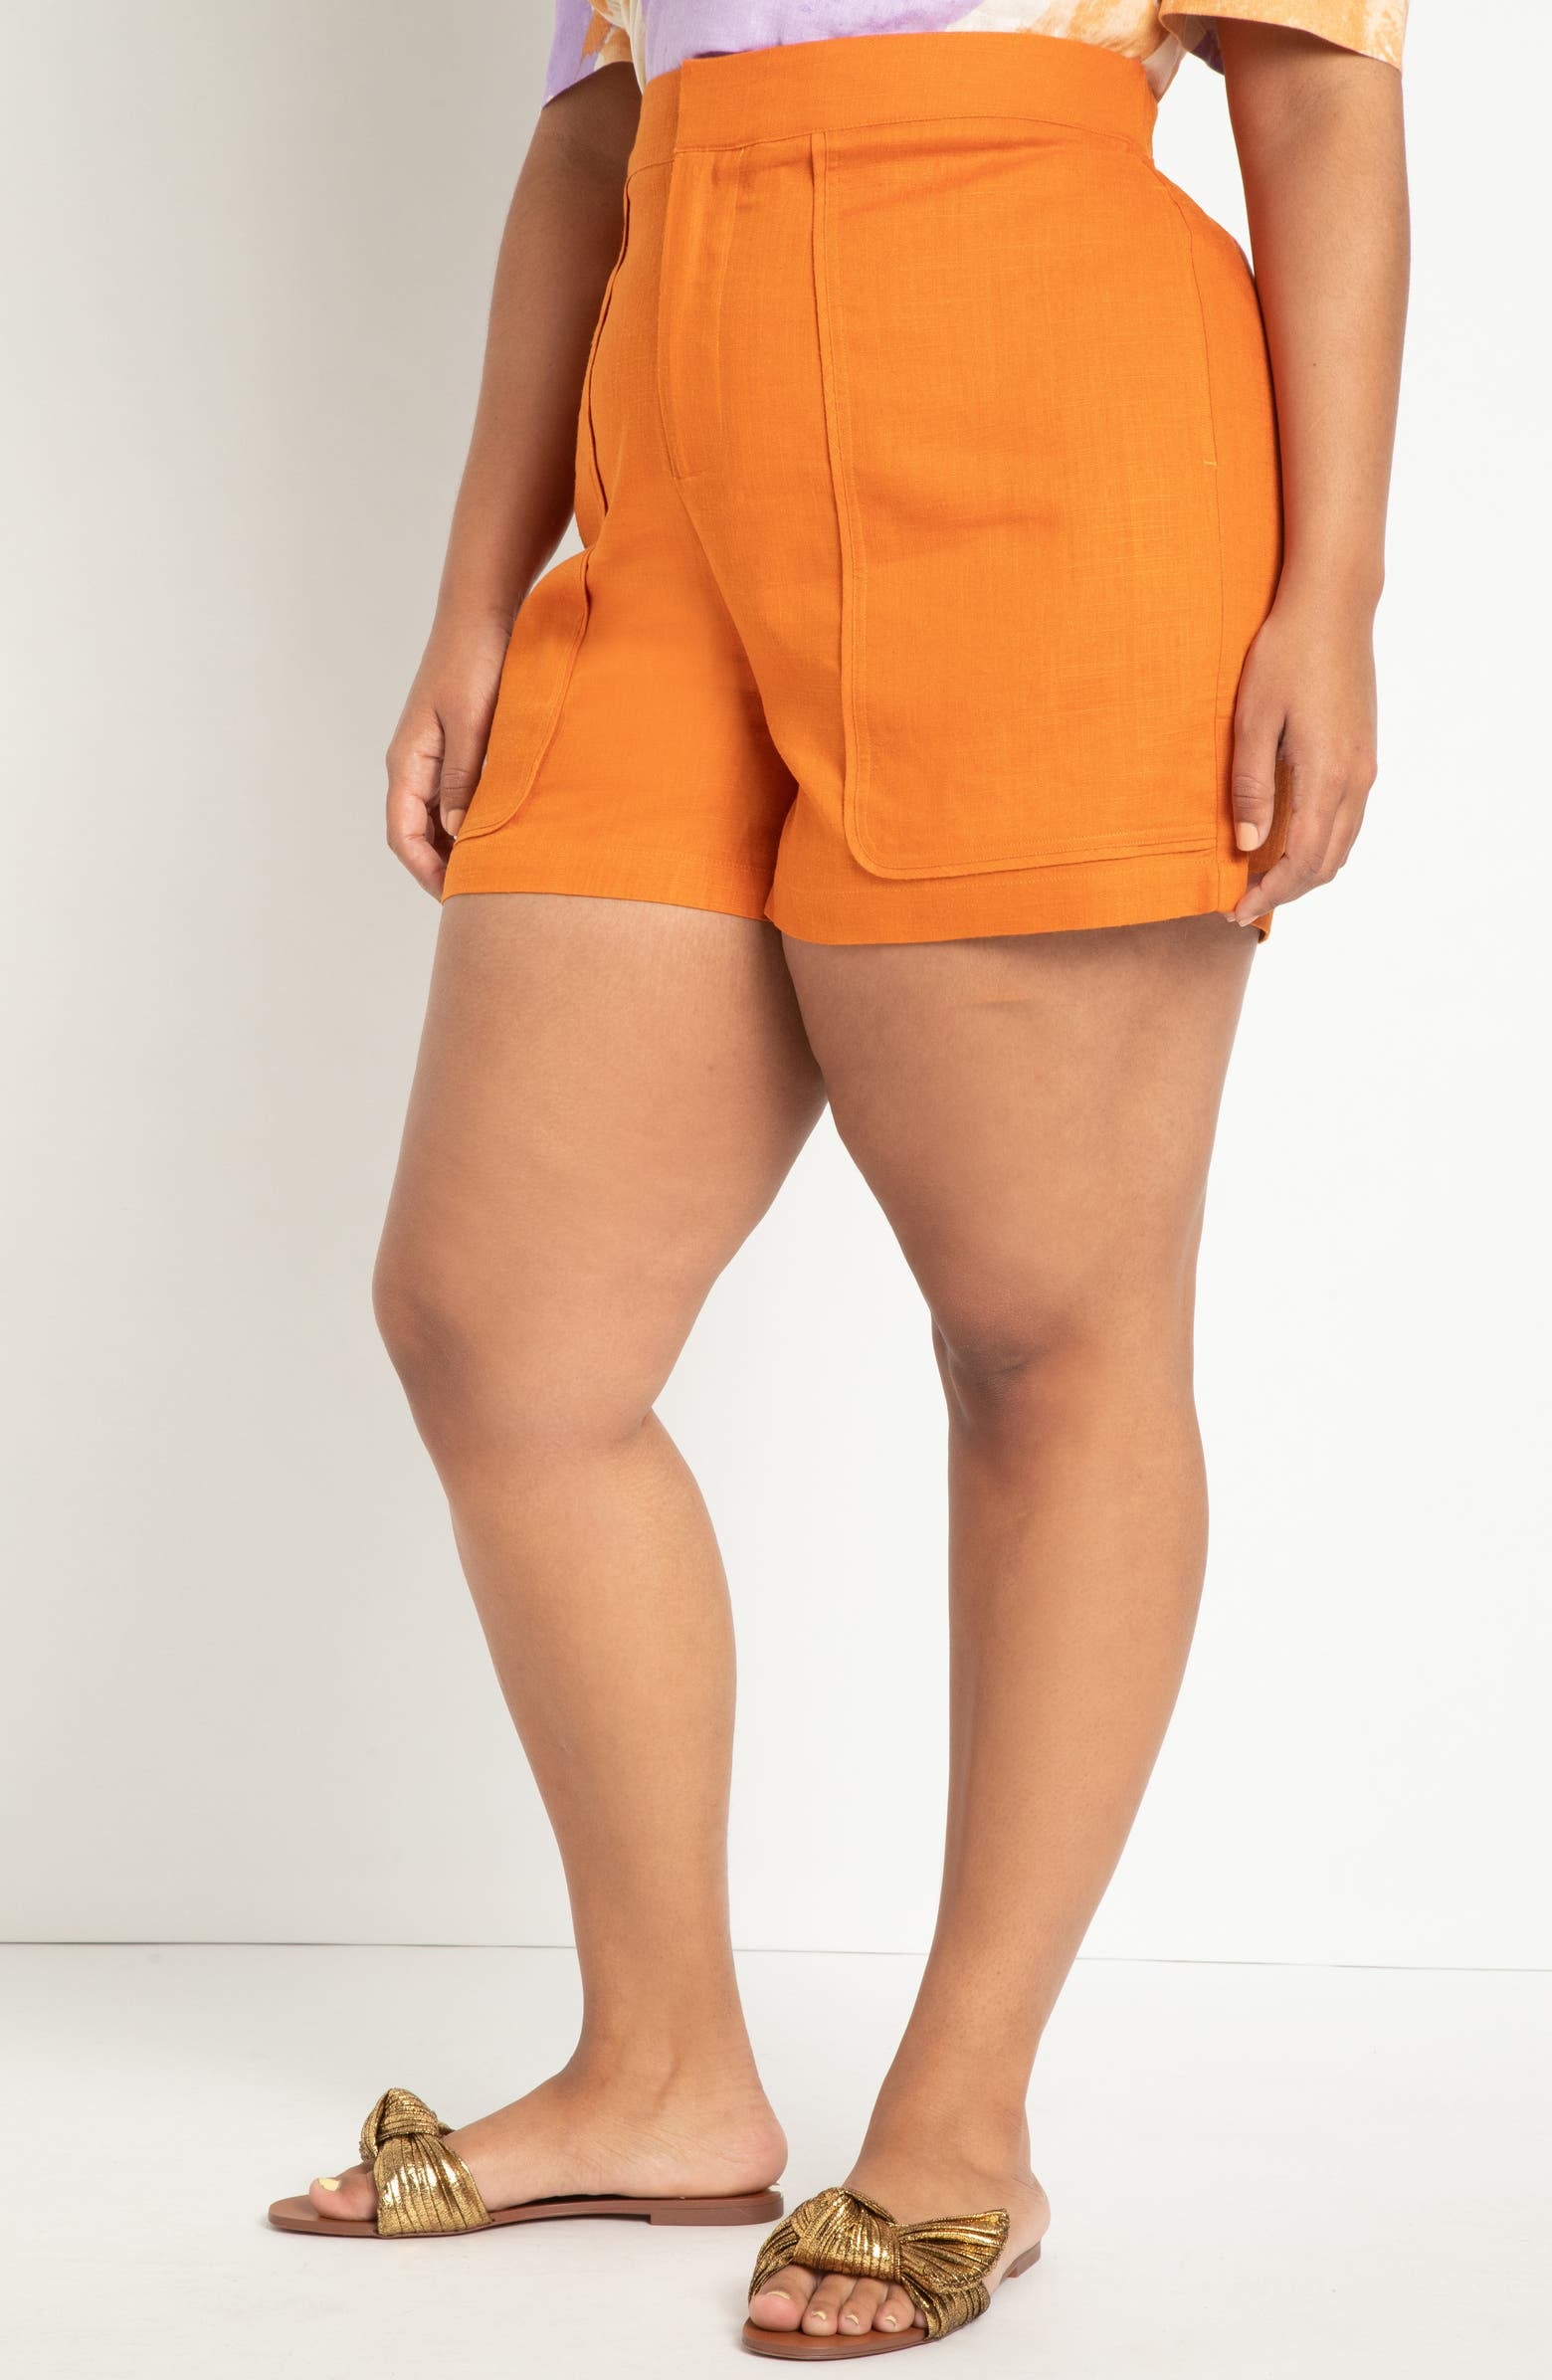 Dressy Shorts: Cute Shorts For Women